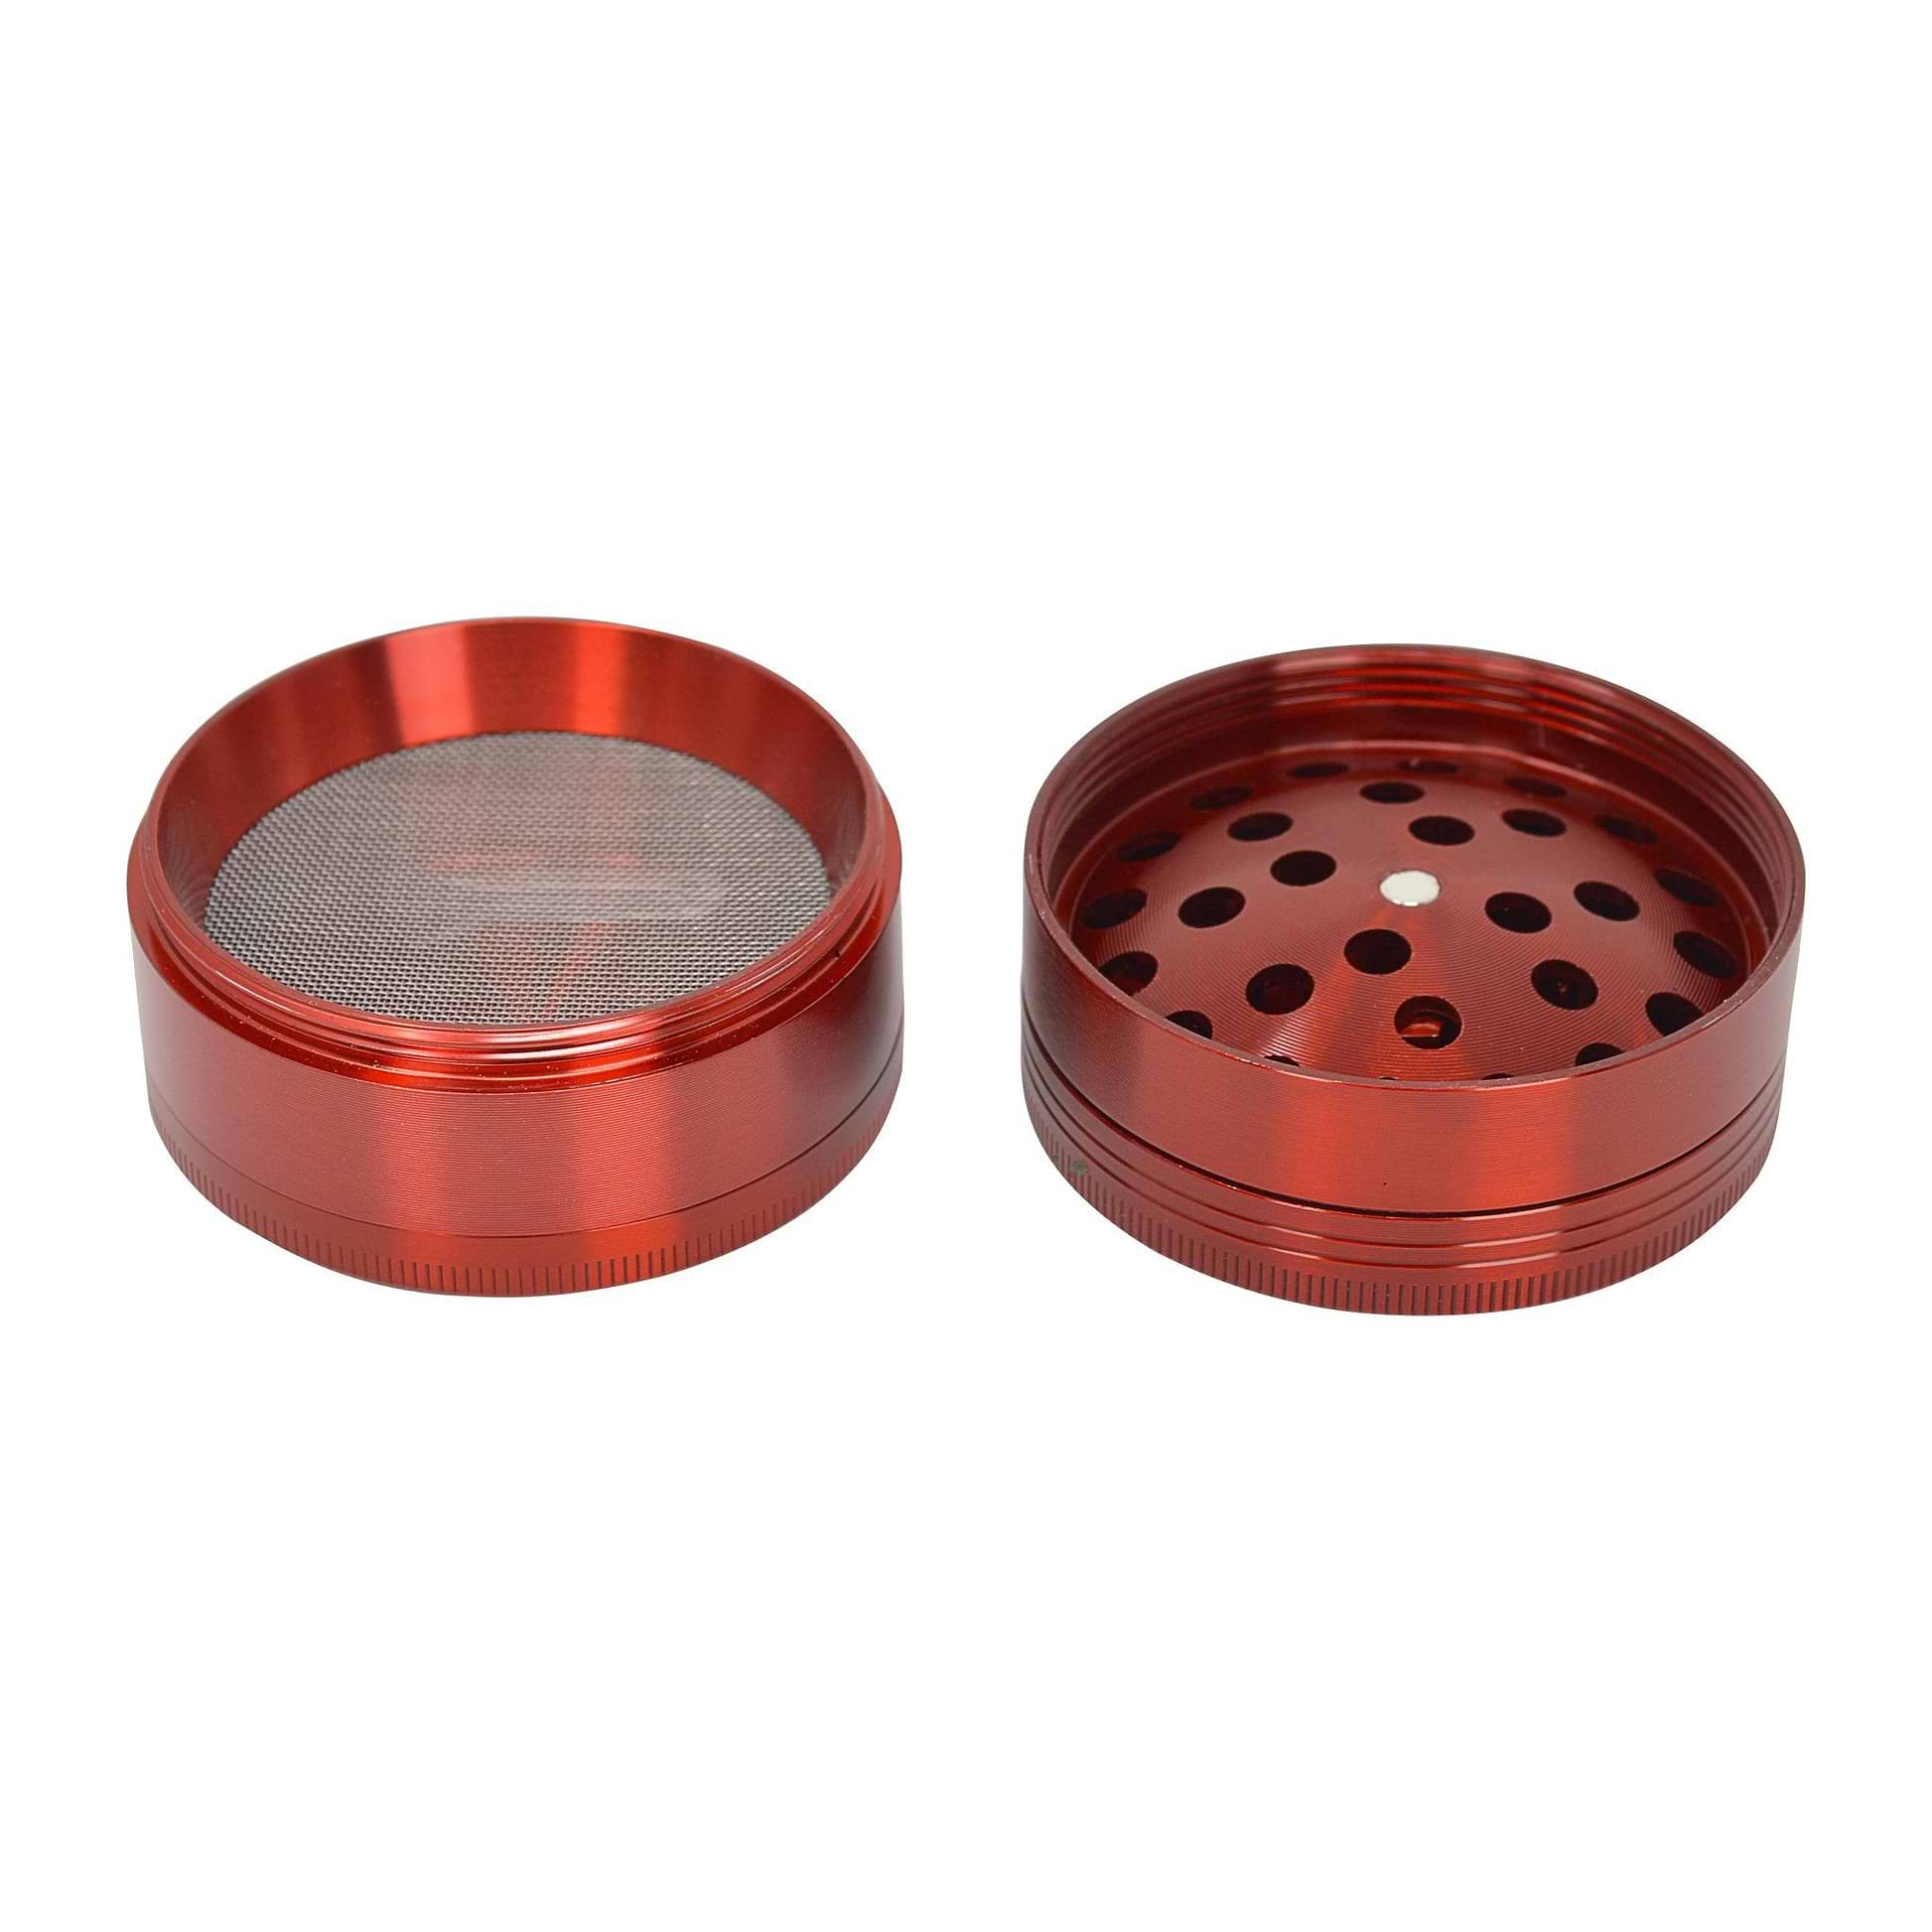 Open 63mm 4-piece round aluminum crusher smoking accessory red metallic and Chromium Crusher label on lid